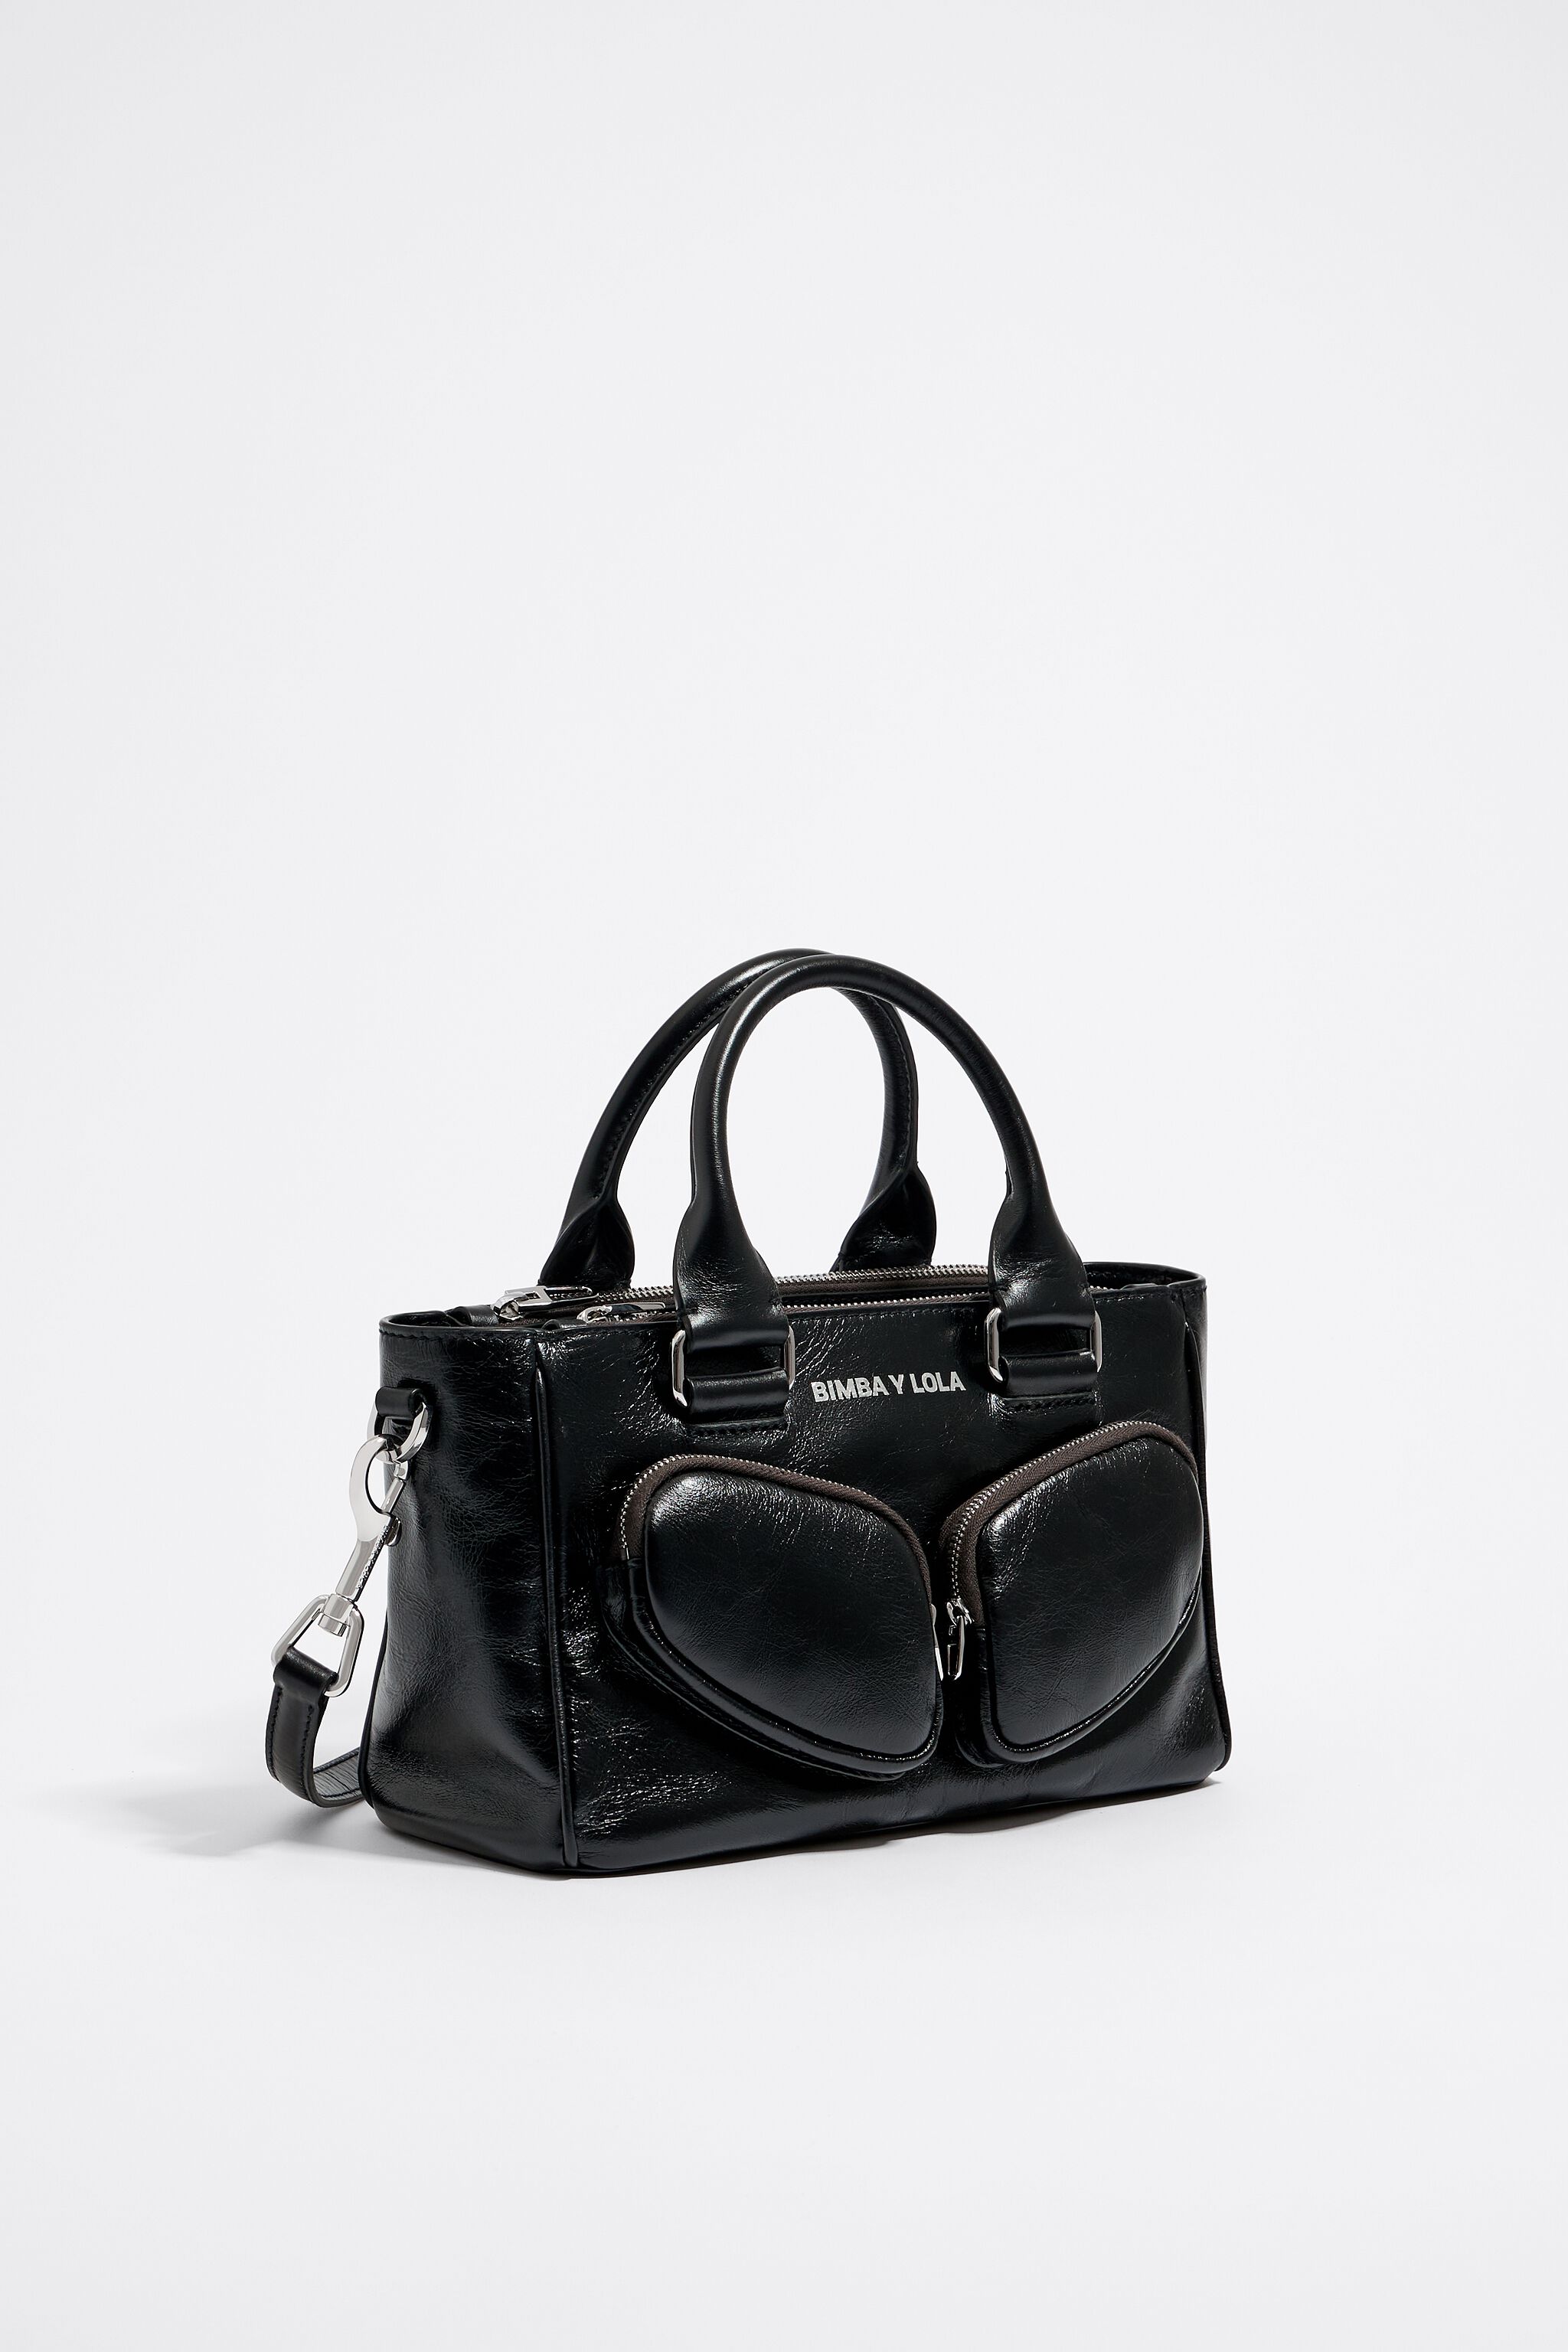 Bimba Y Lola Bag Women Shoulder Bag,crossbody Bag Women Luxury Handbags  Waterproof Bag | Fruugo KR